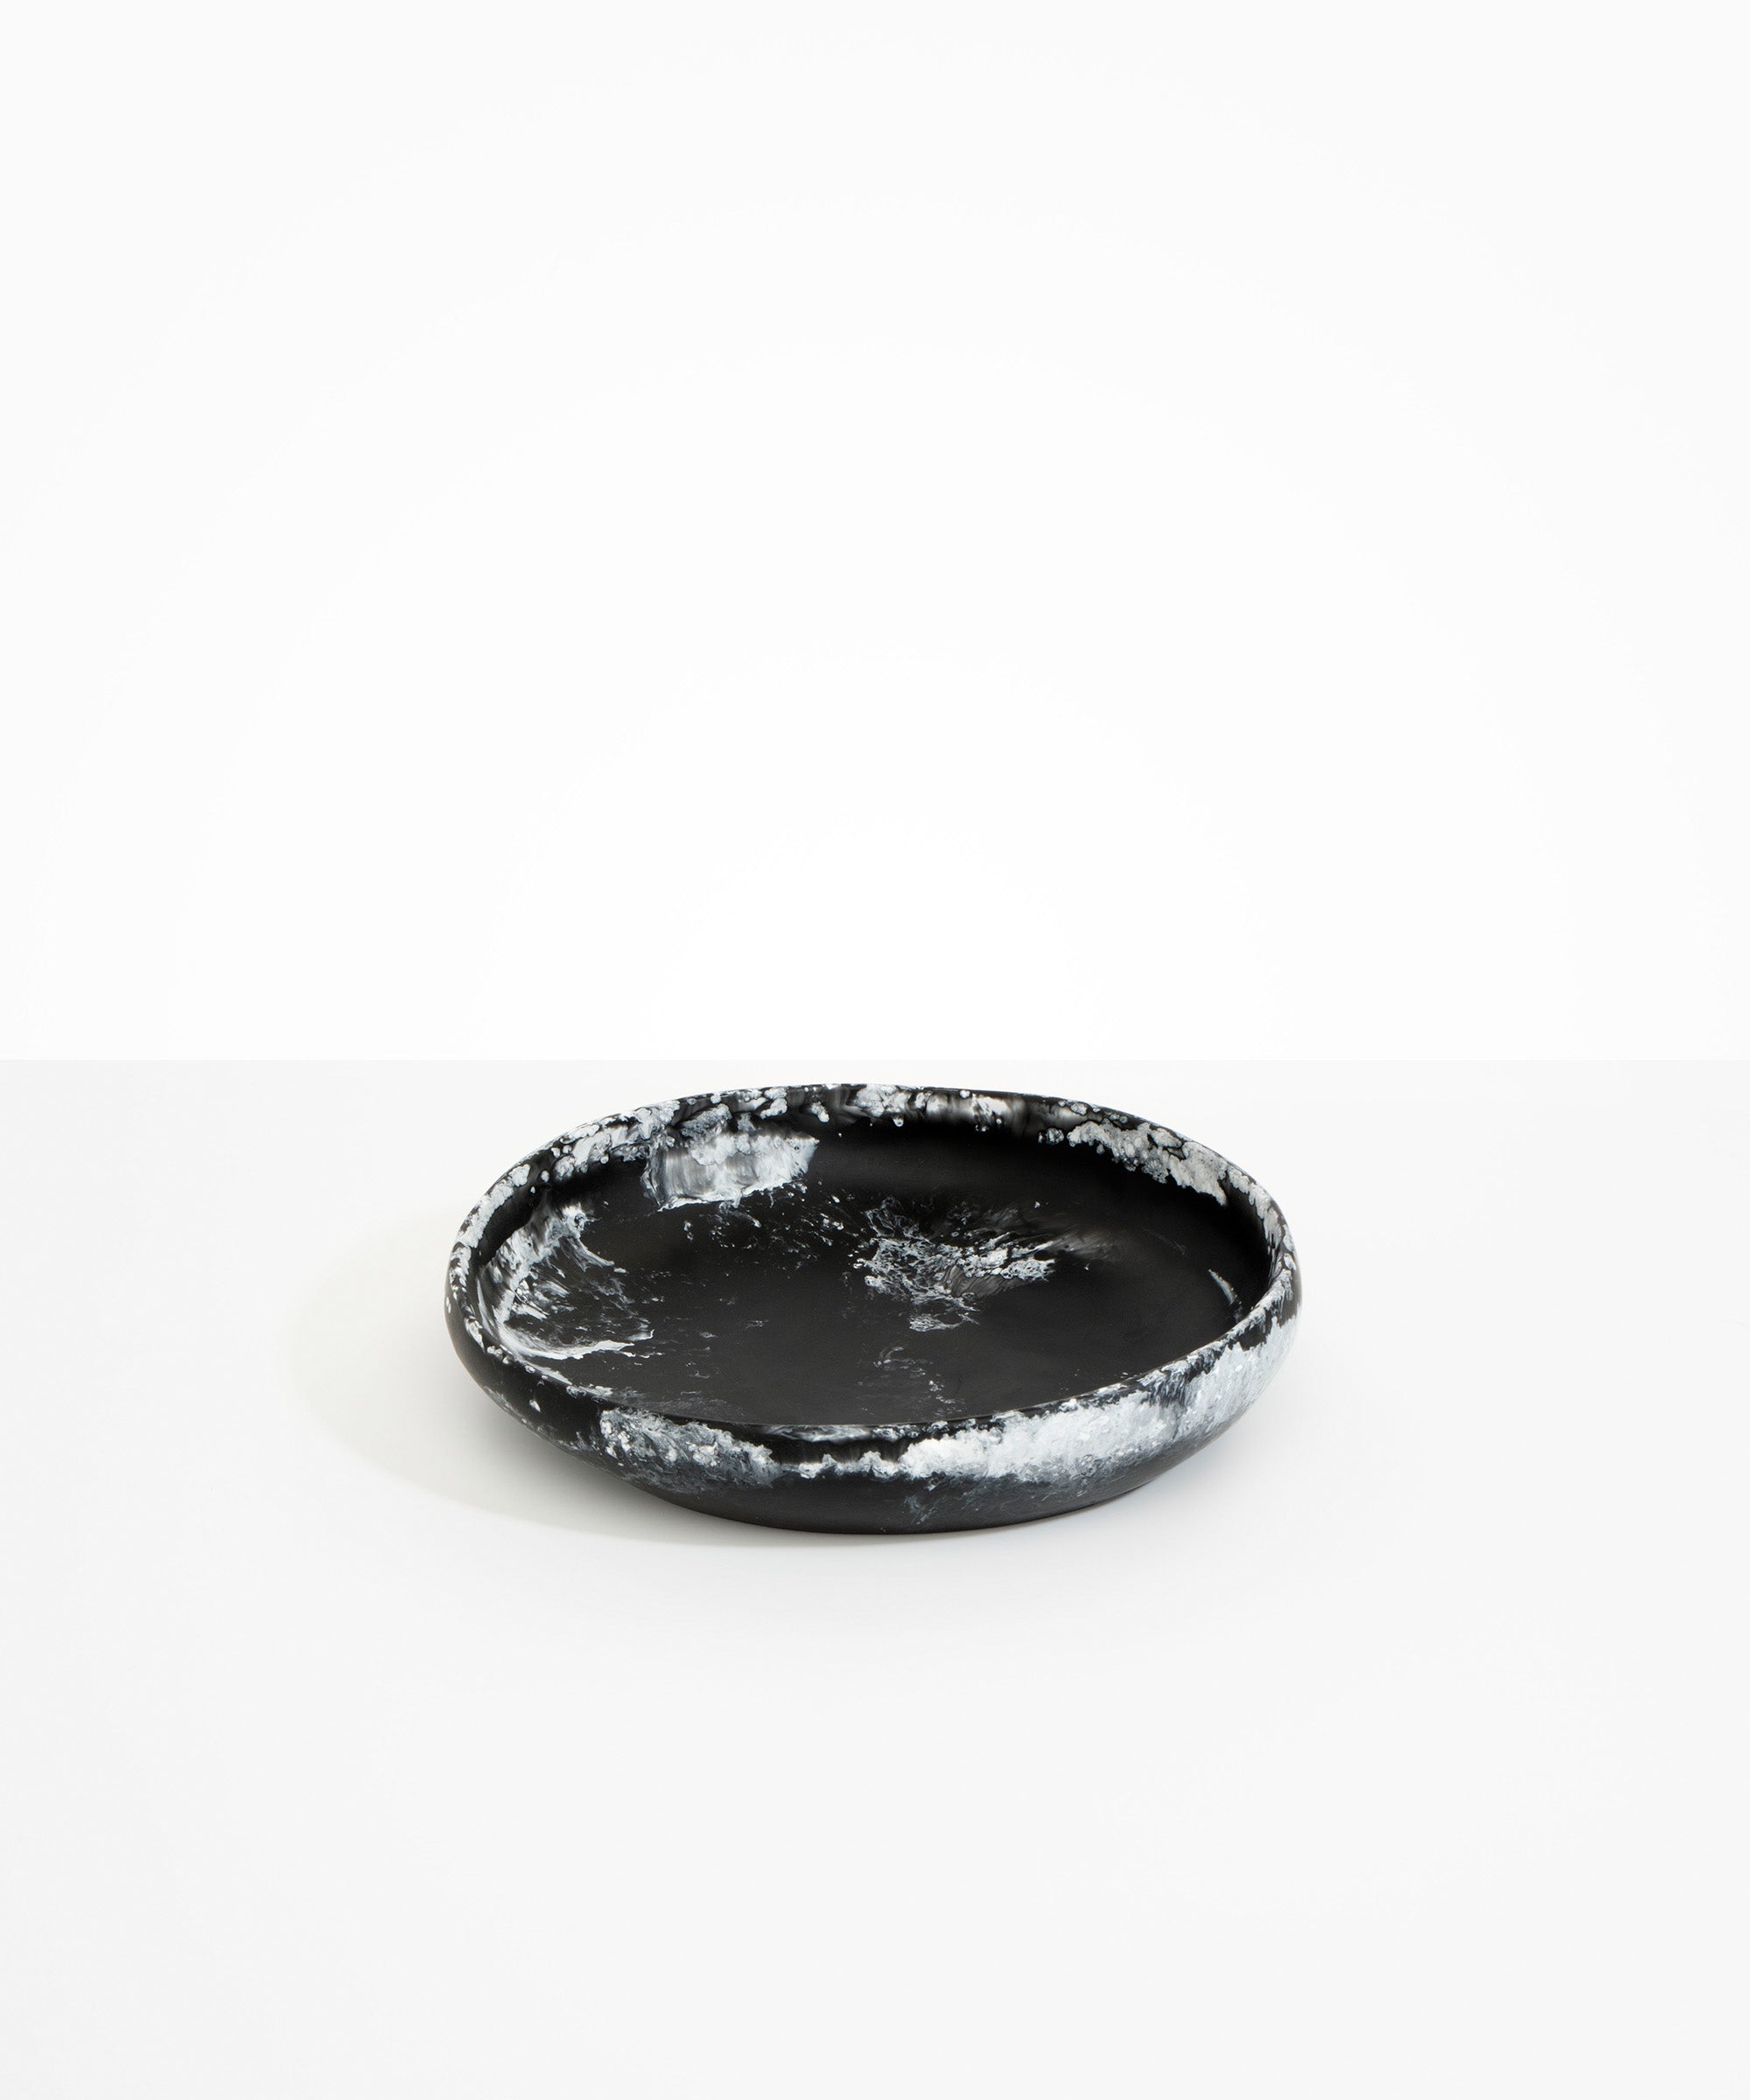 Dinosaur Designs Medium Earth Bowl Bowls in Black Marble color resin